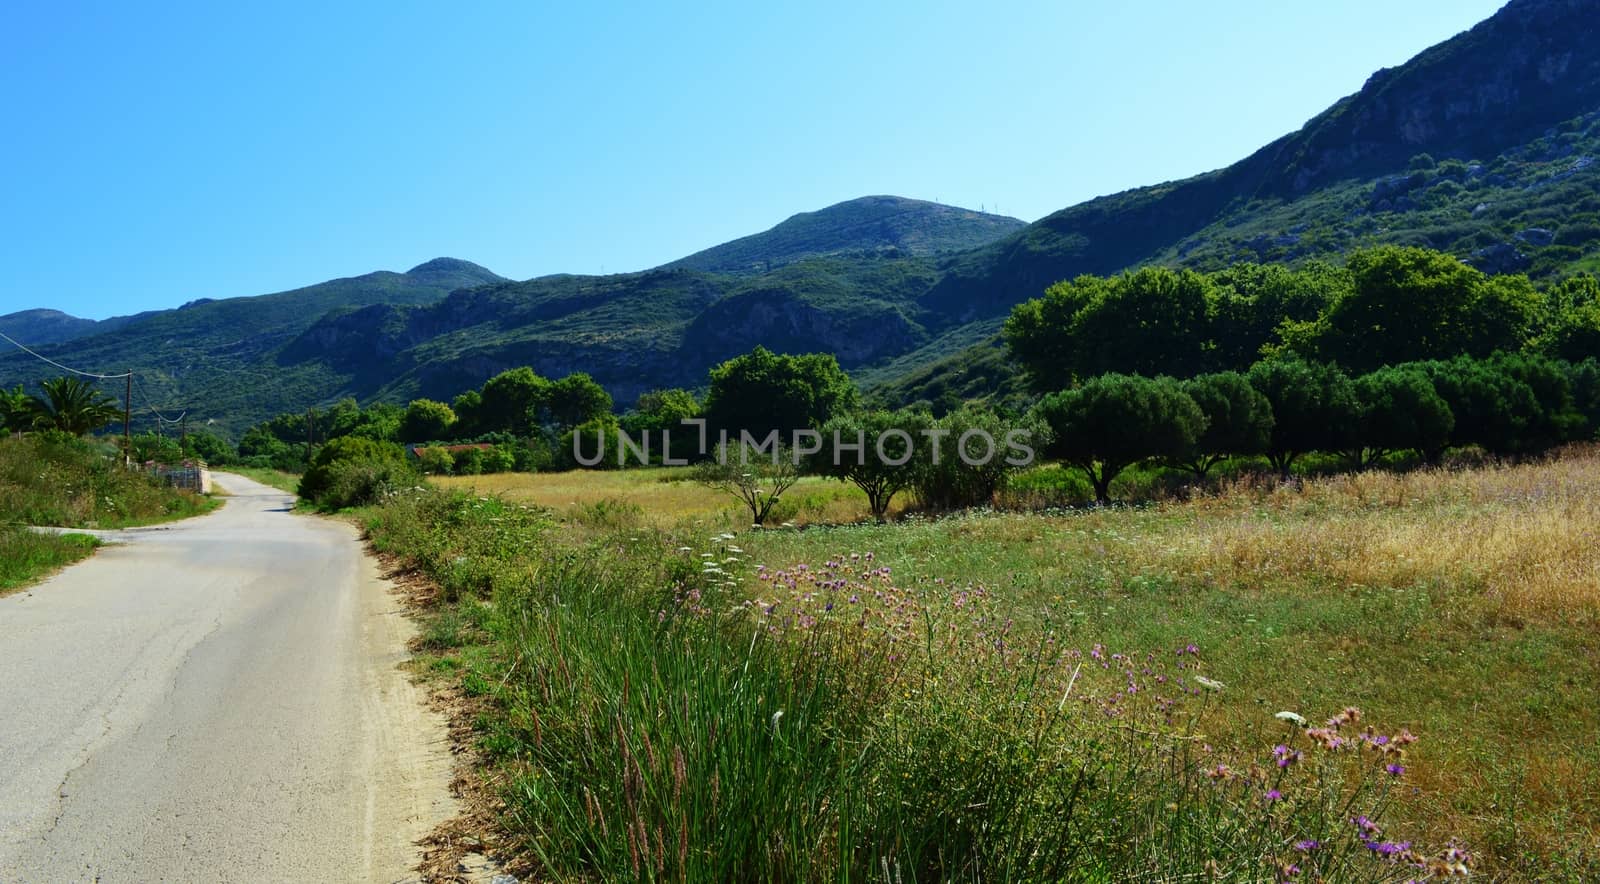 An image of Greek countryside taken close to katelios on the beautiful Island of kefalonia.